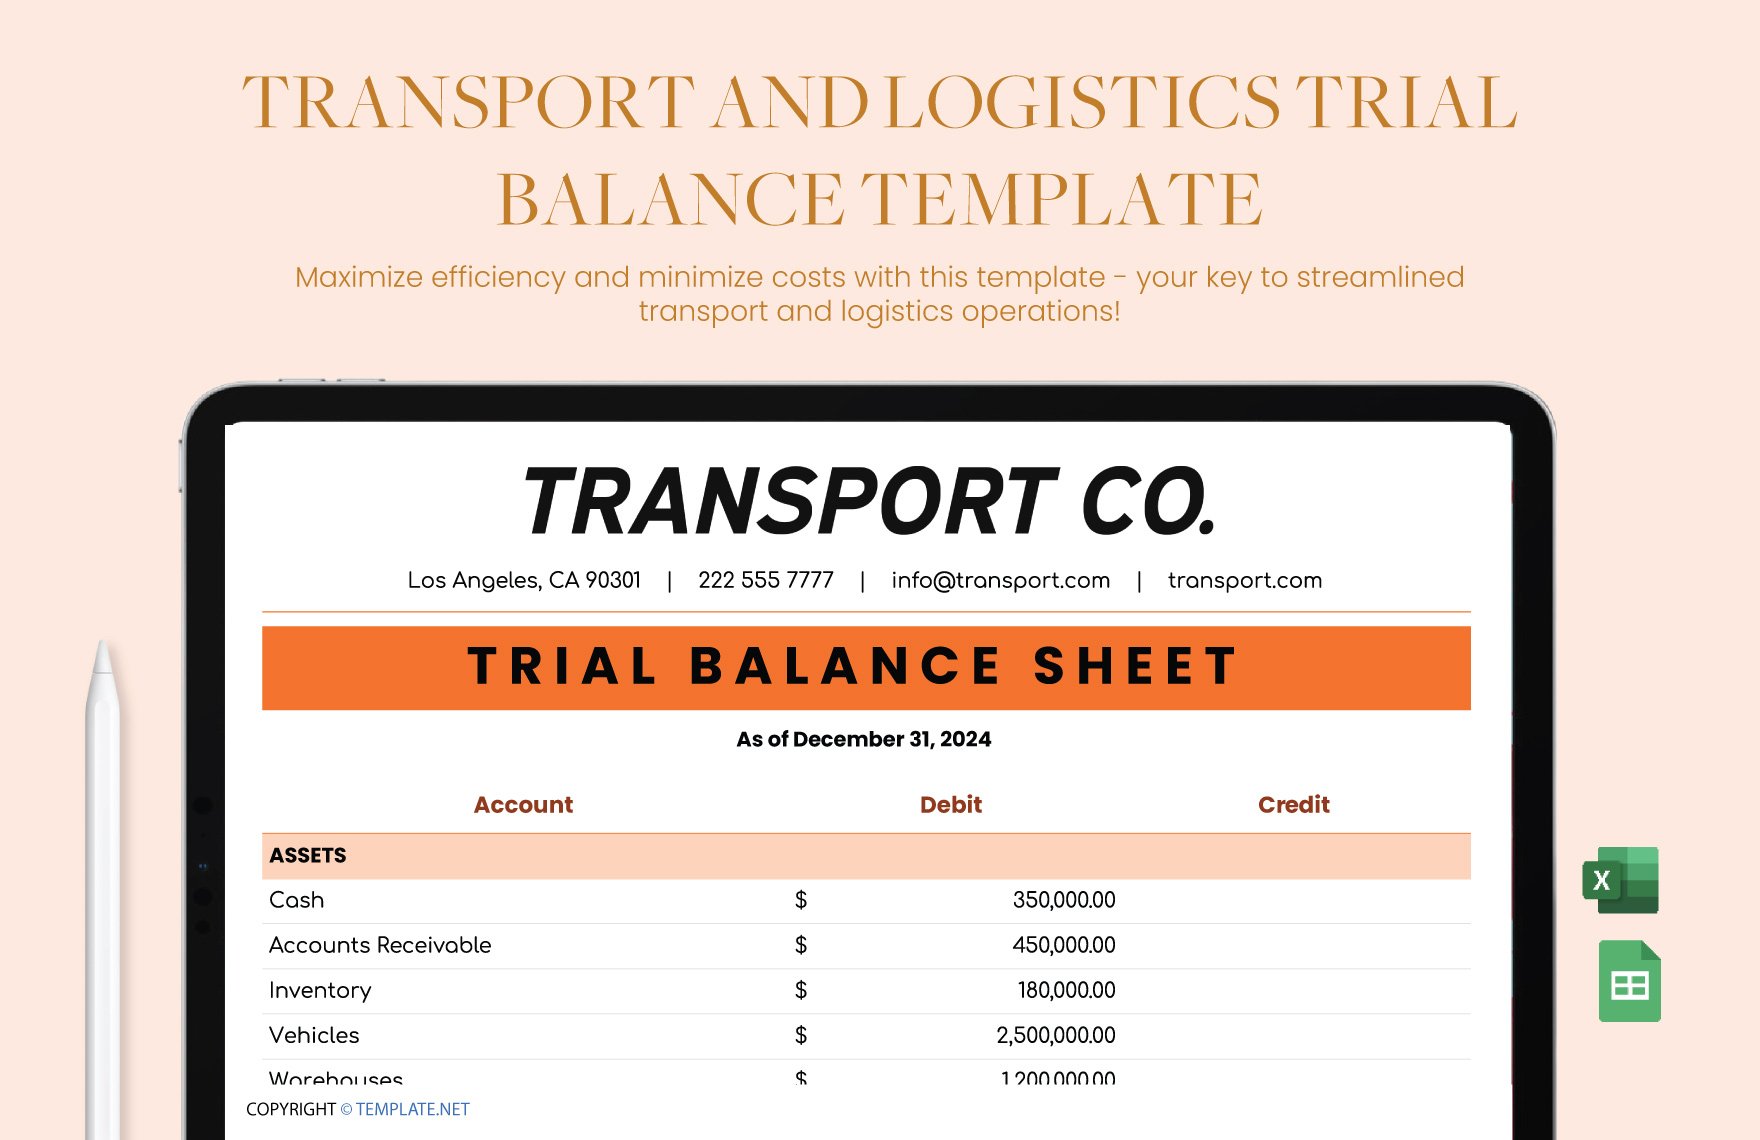 Transport and Logistics Trial Balance Template